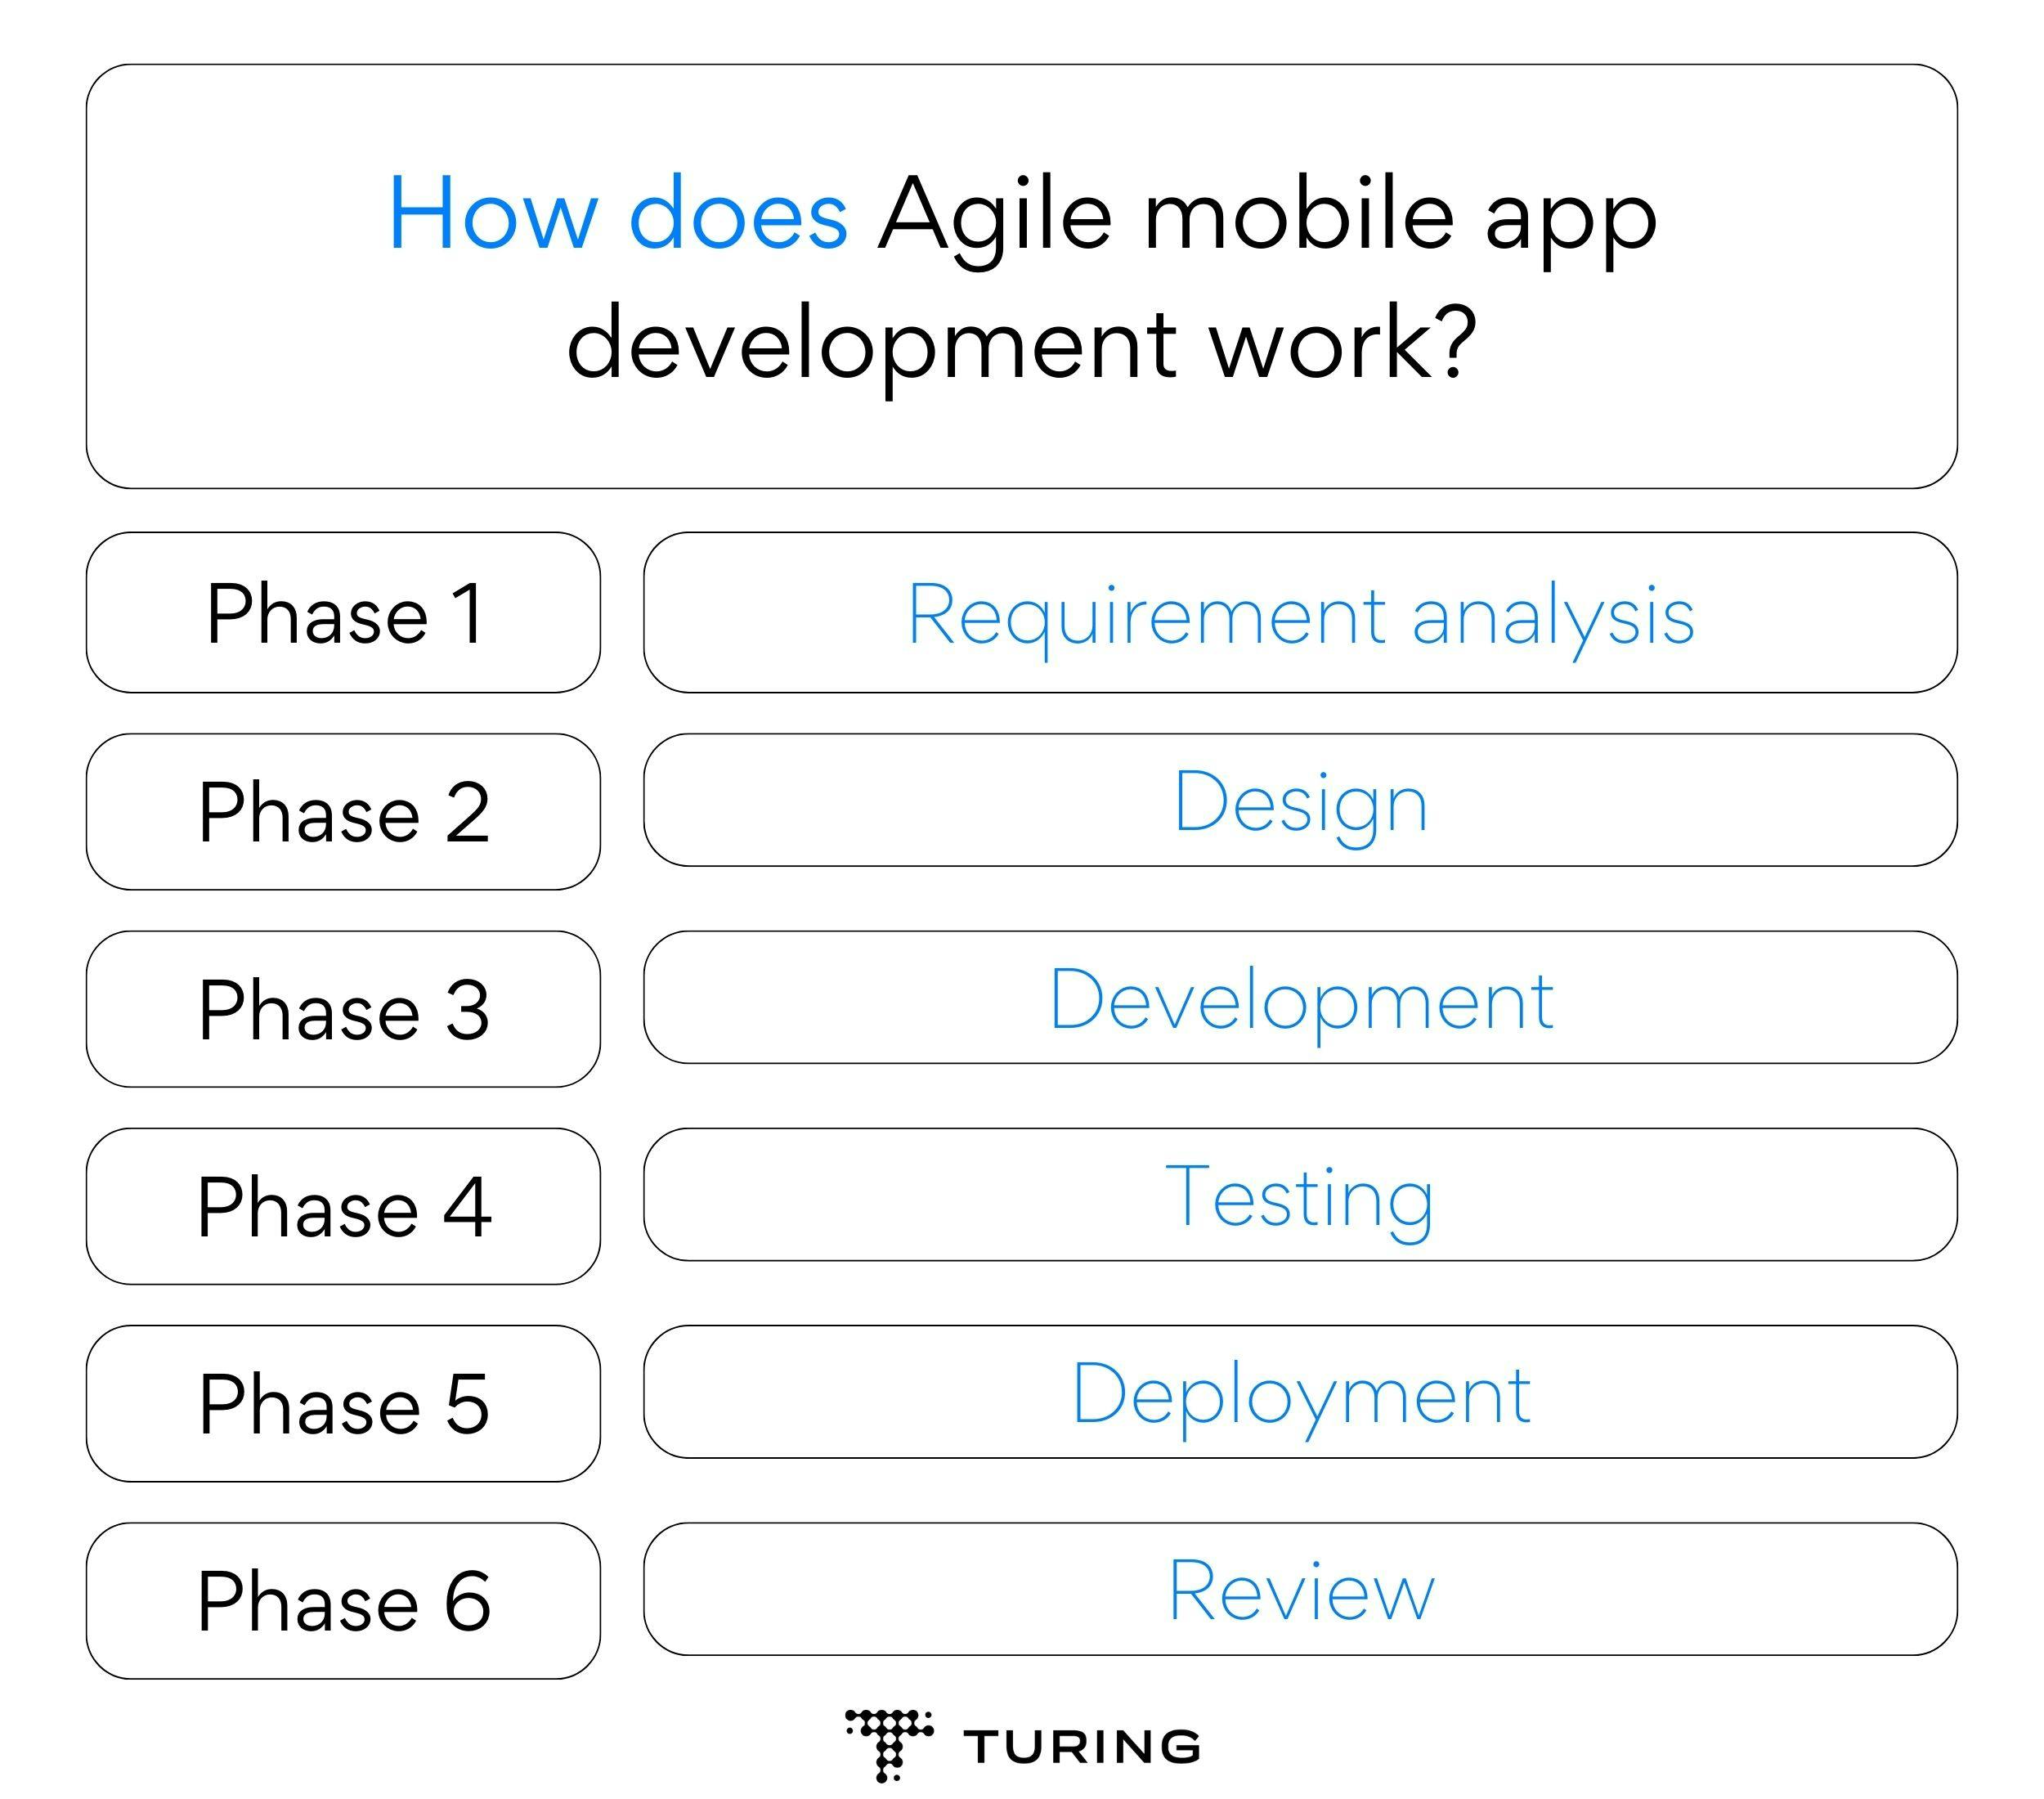 How does Agile mobile app development work